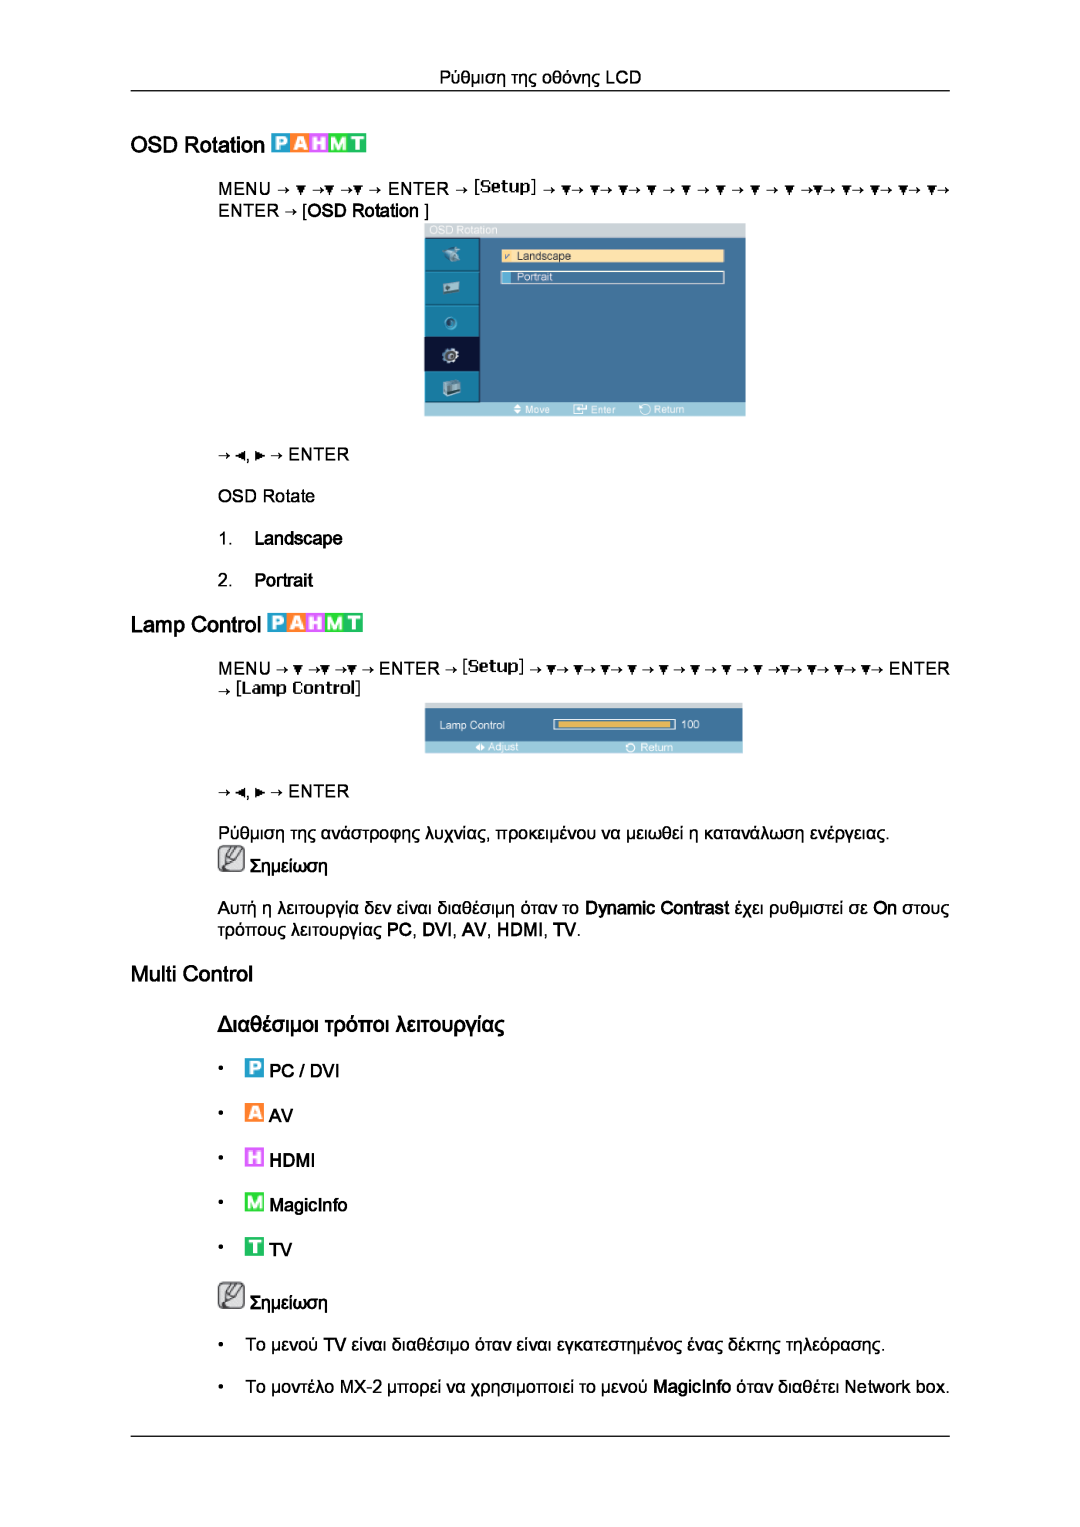 Samsung LH46MGULBC/EN manual OSD Rotation, Lamp Control, Multi Control Διαθέσιμοι τρόποι λειτουργίας, Landscape 2. Portrait 